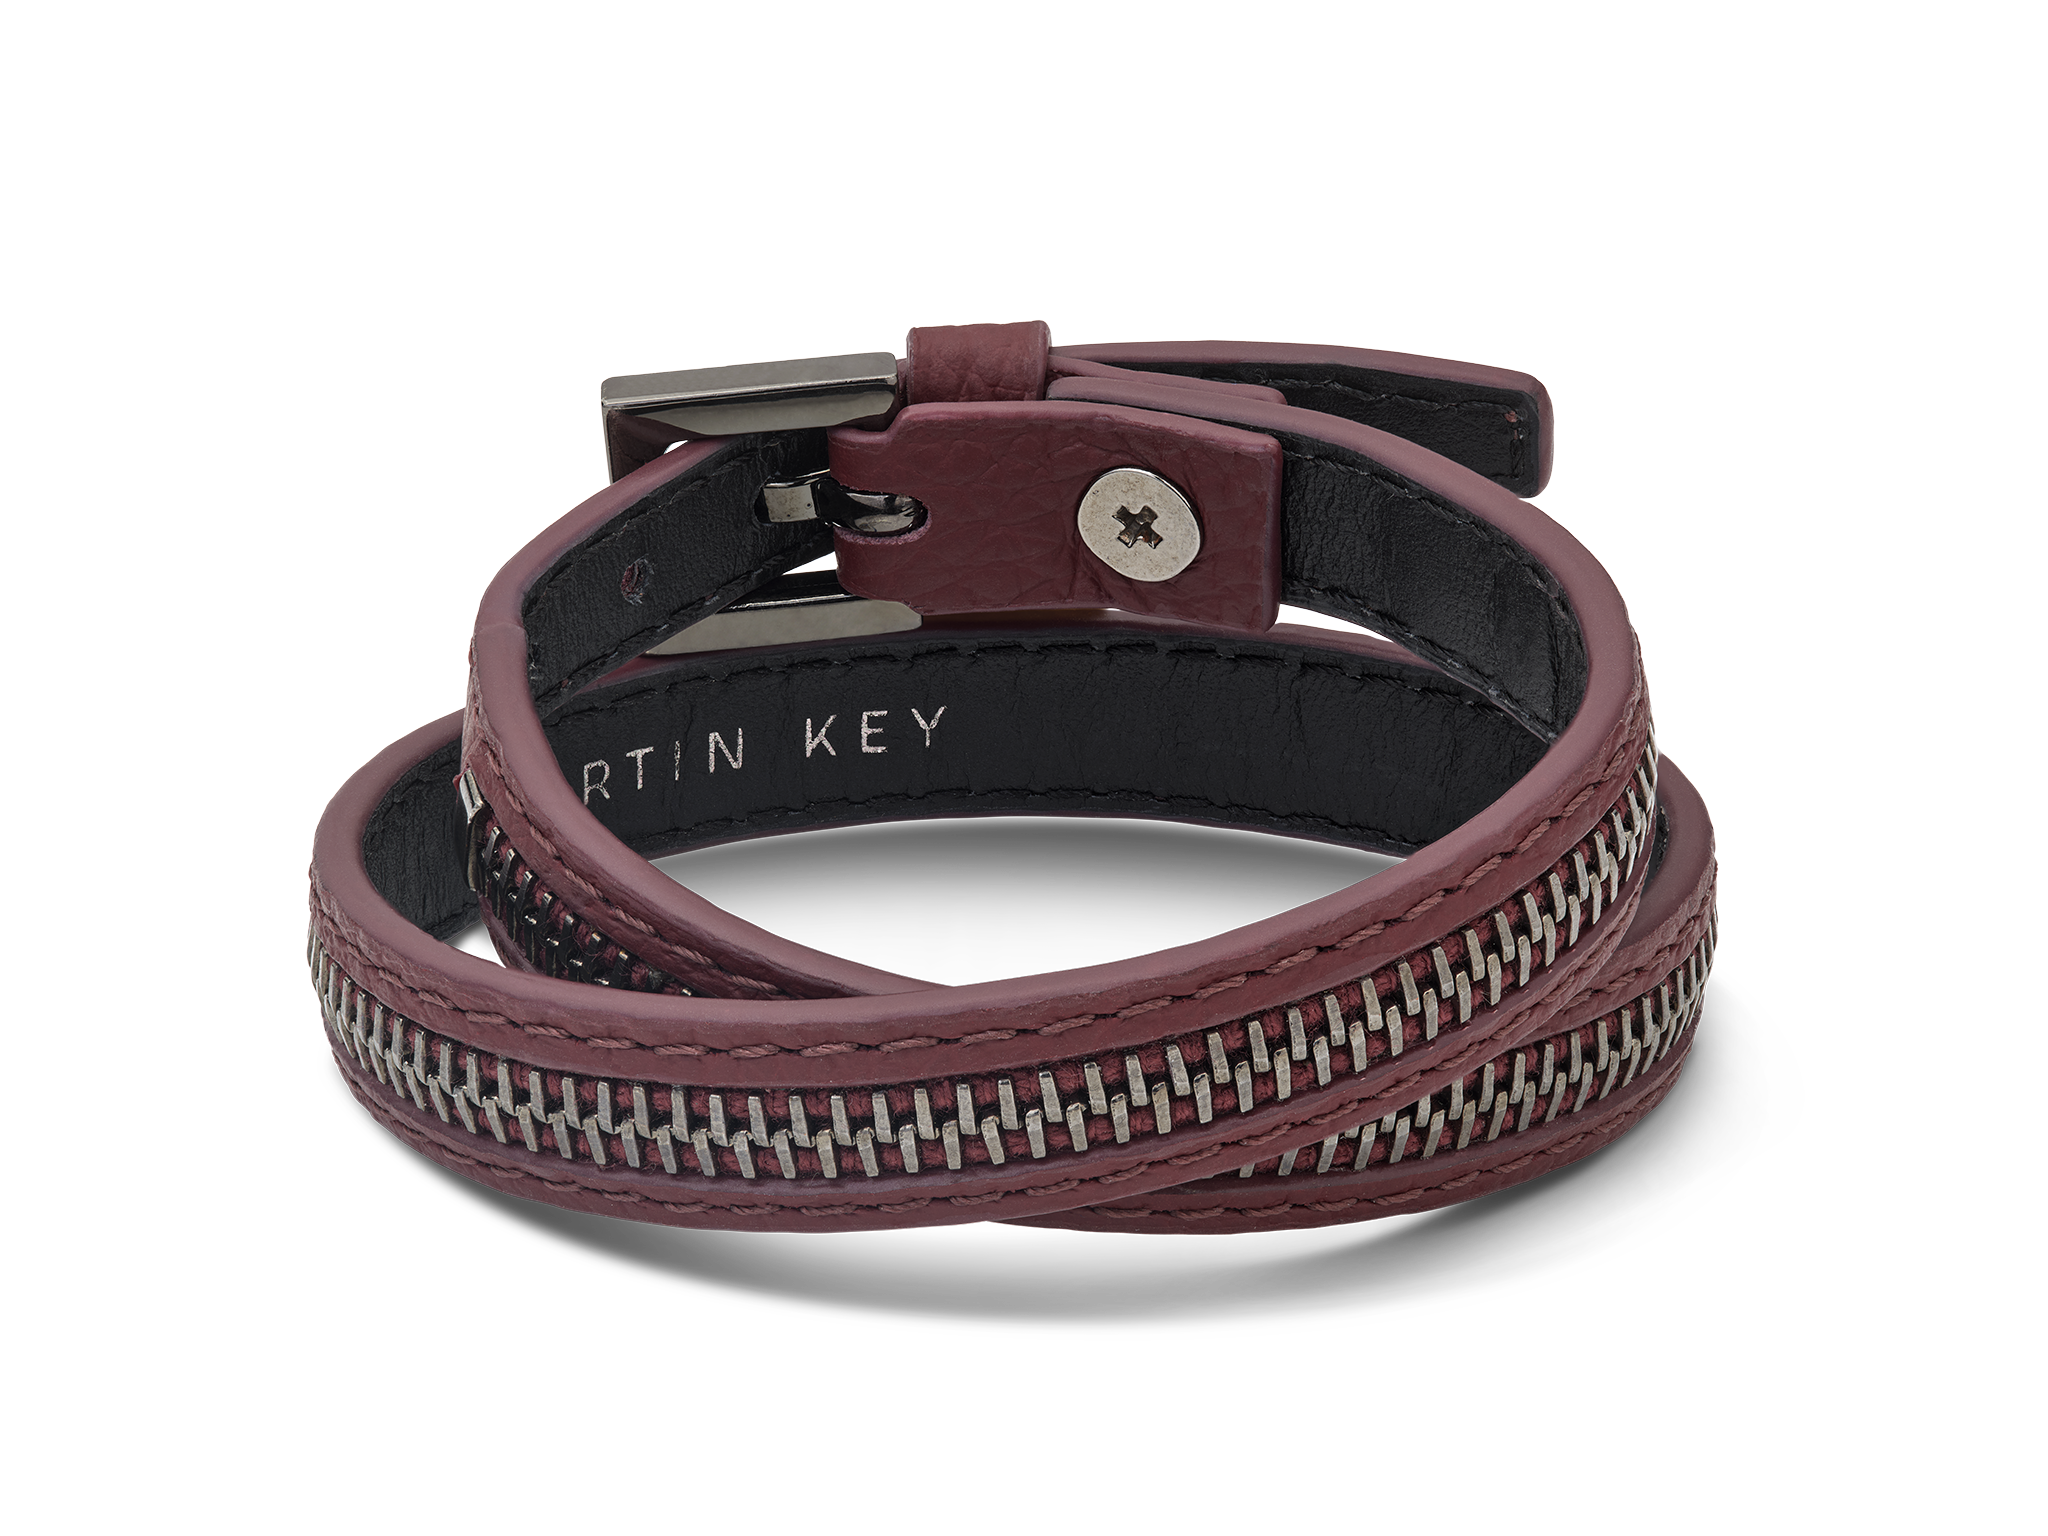 Leather bracelet in merlot and Gun Metal